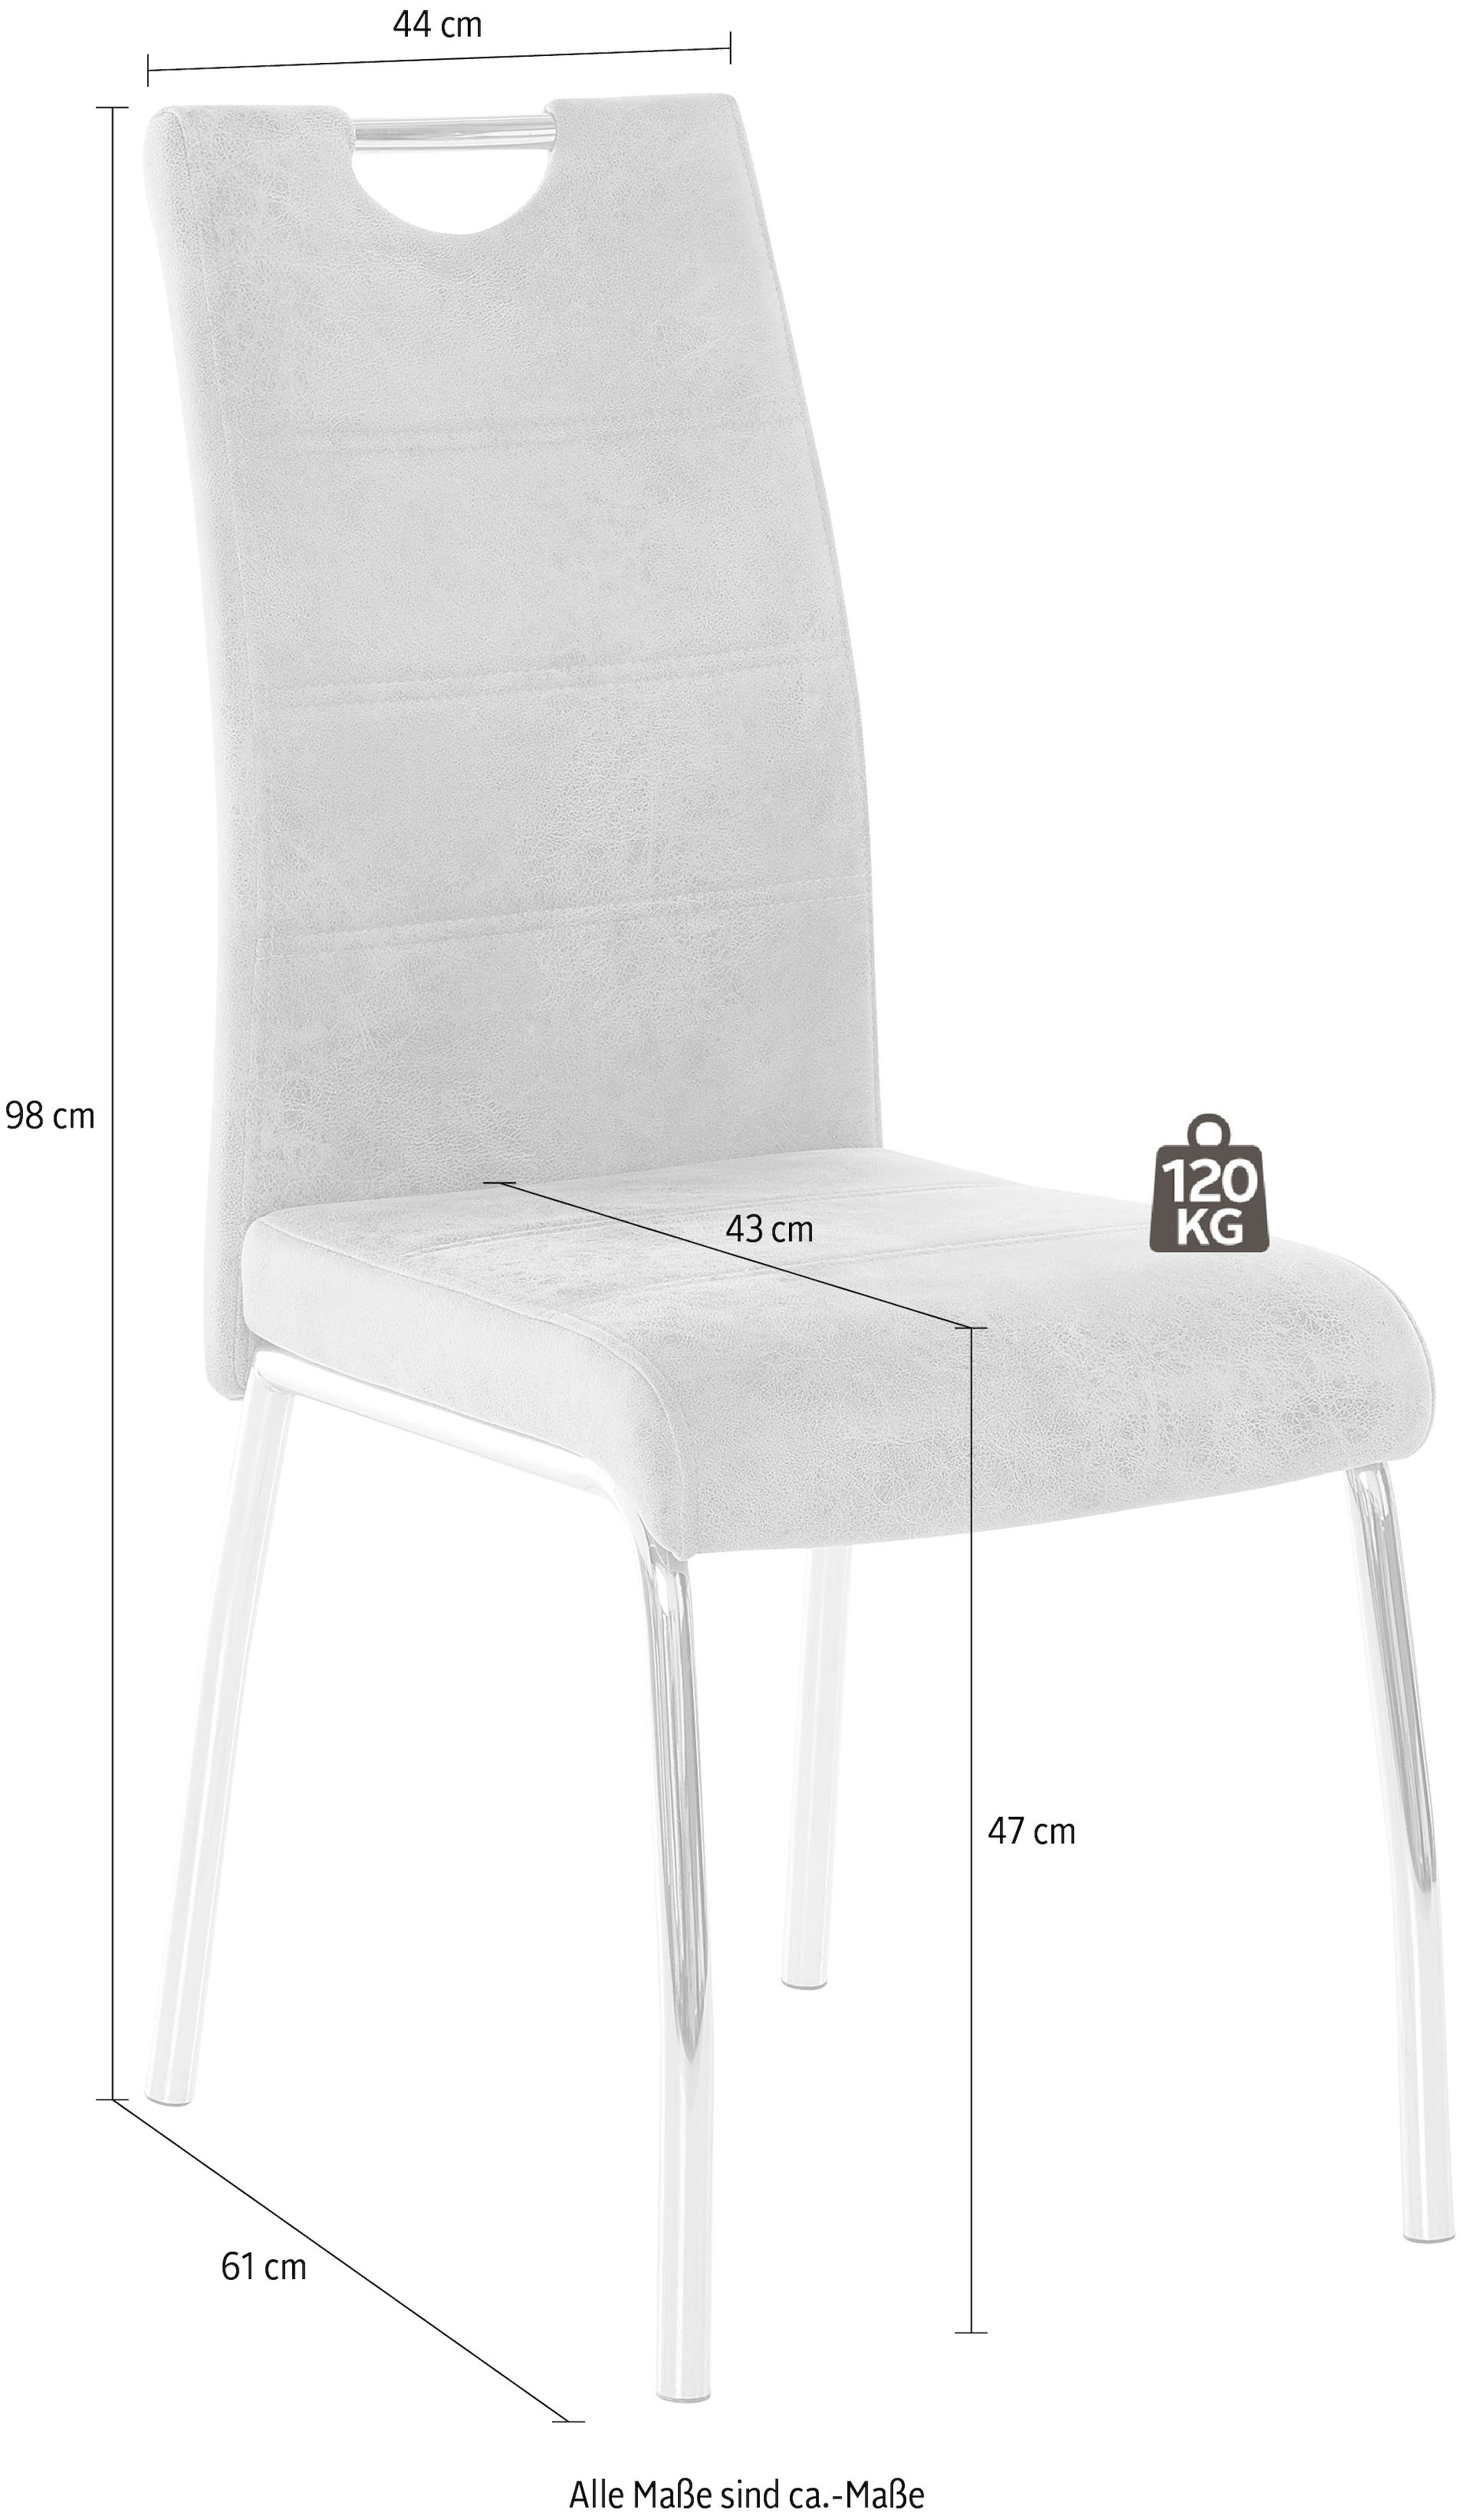 HELA Stuhl »Susi«, (Set), 4 oder 1, Stück kaufen Polyester, 4 St., bequem 2